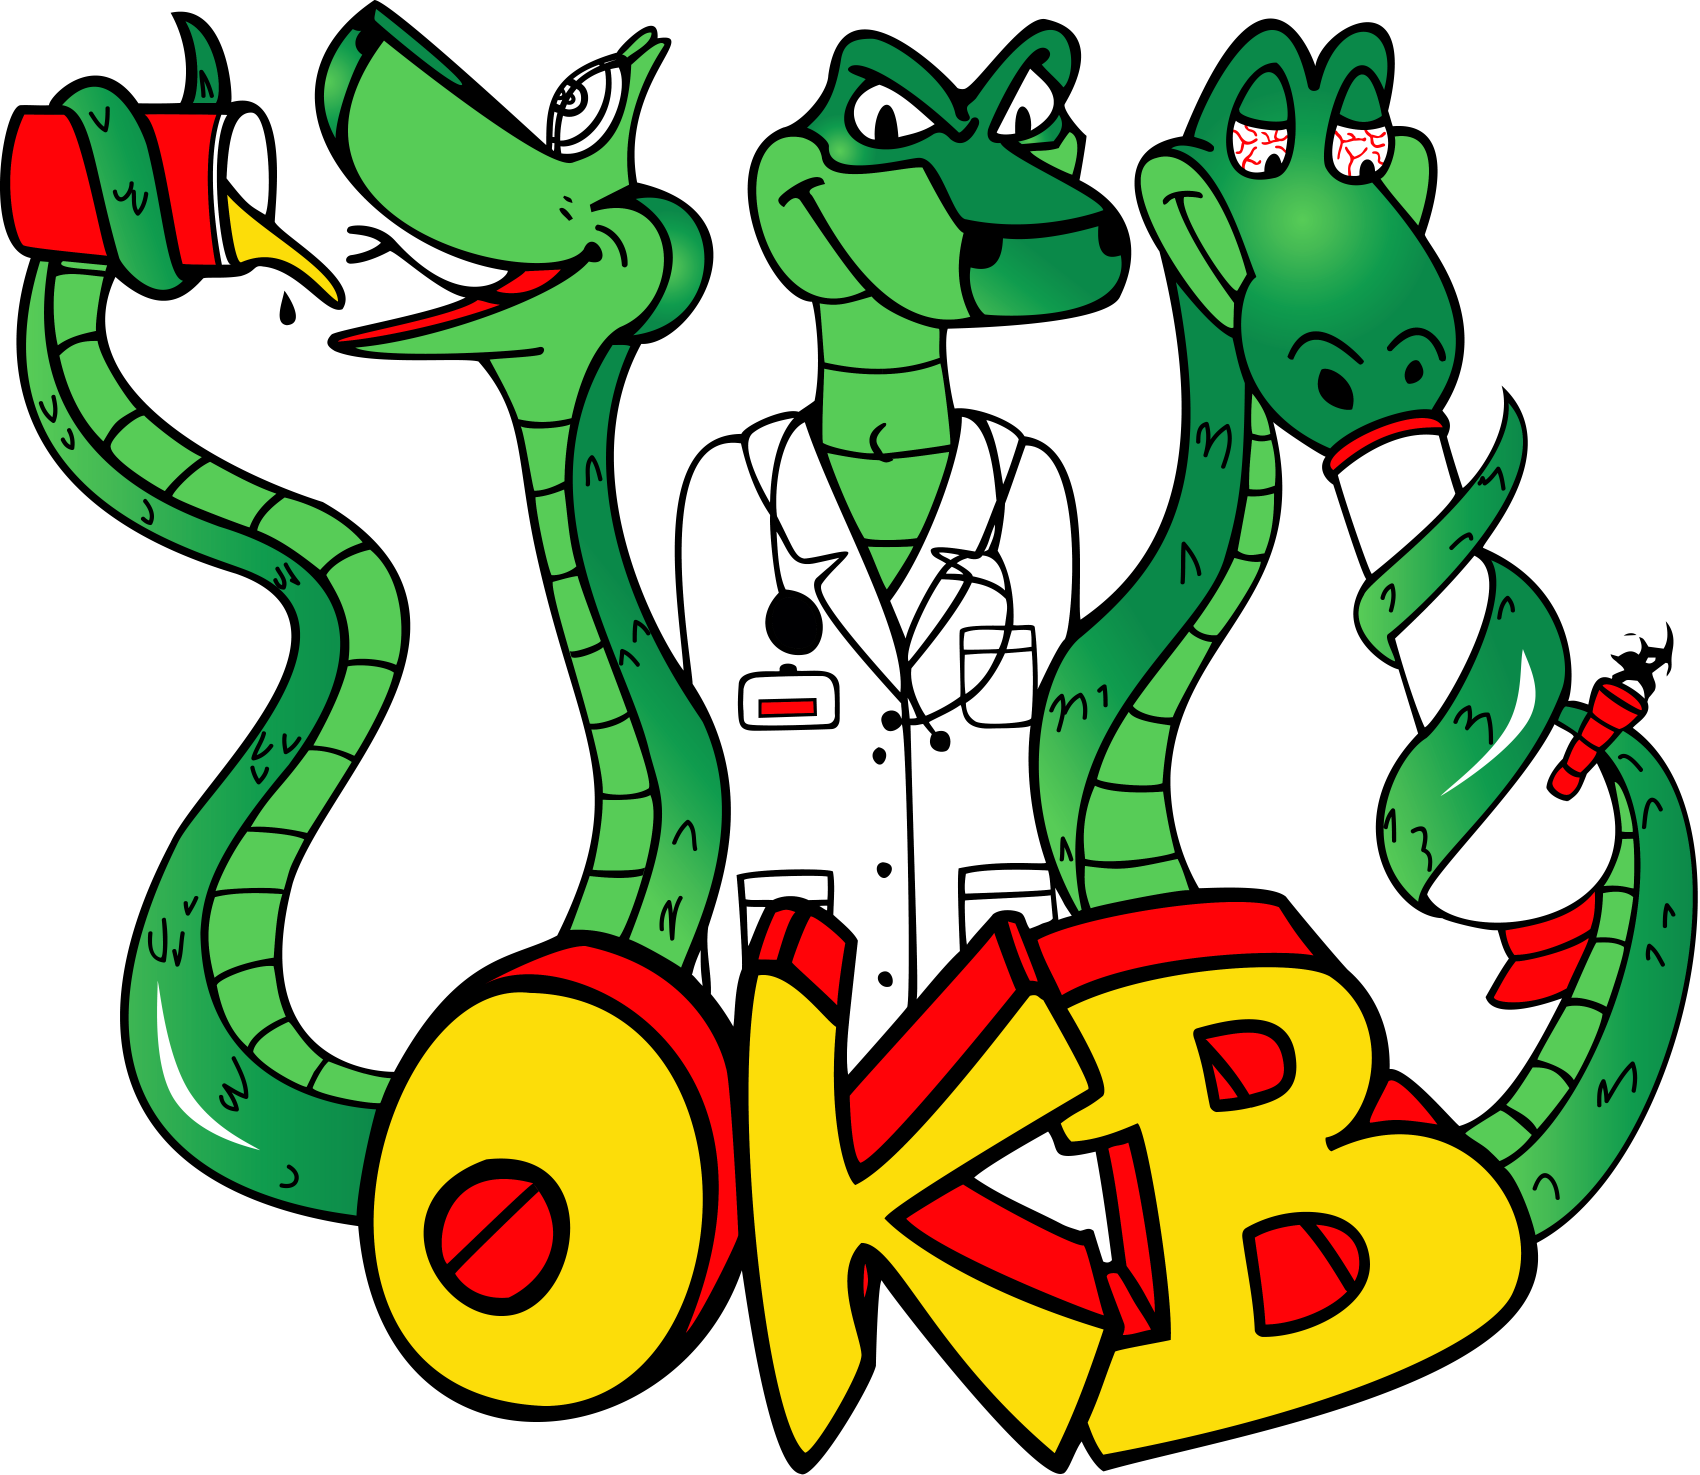 Logo OKB final dégradé